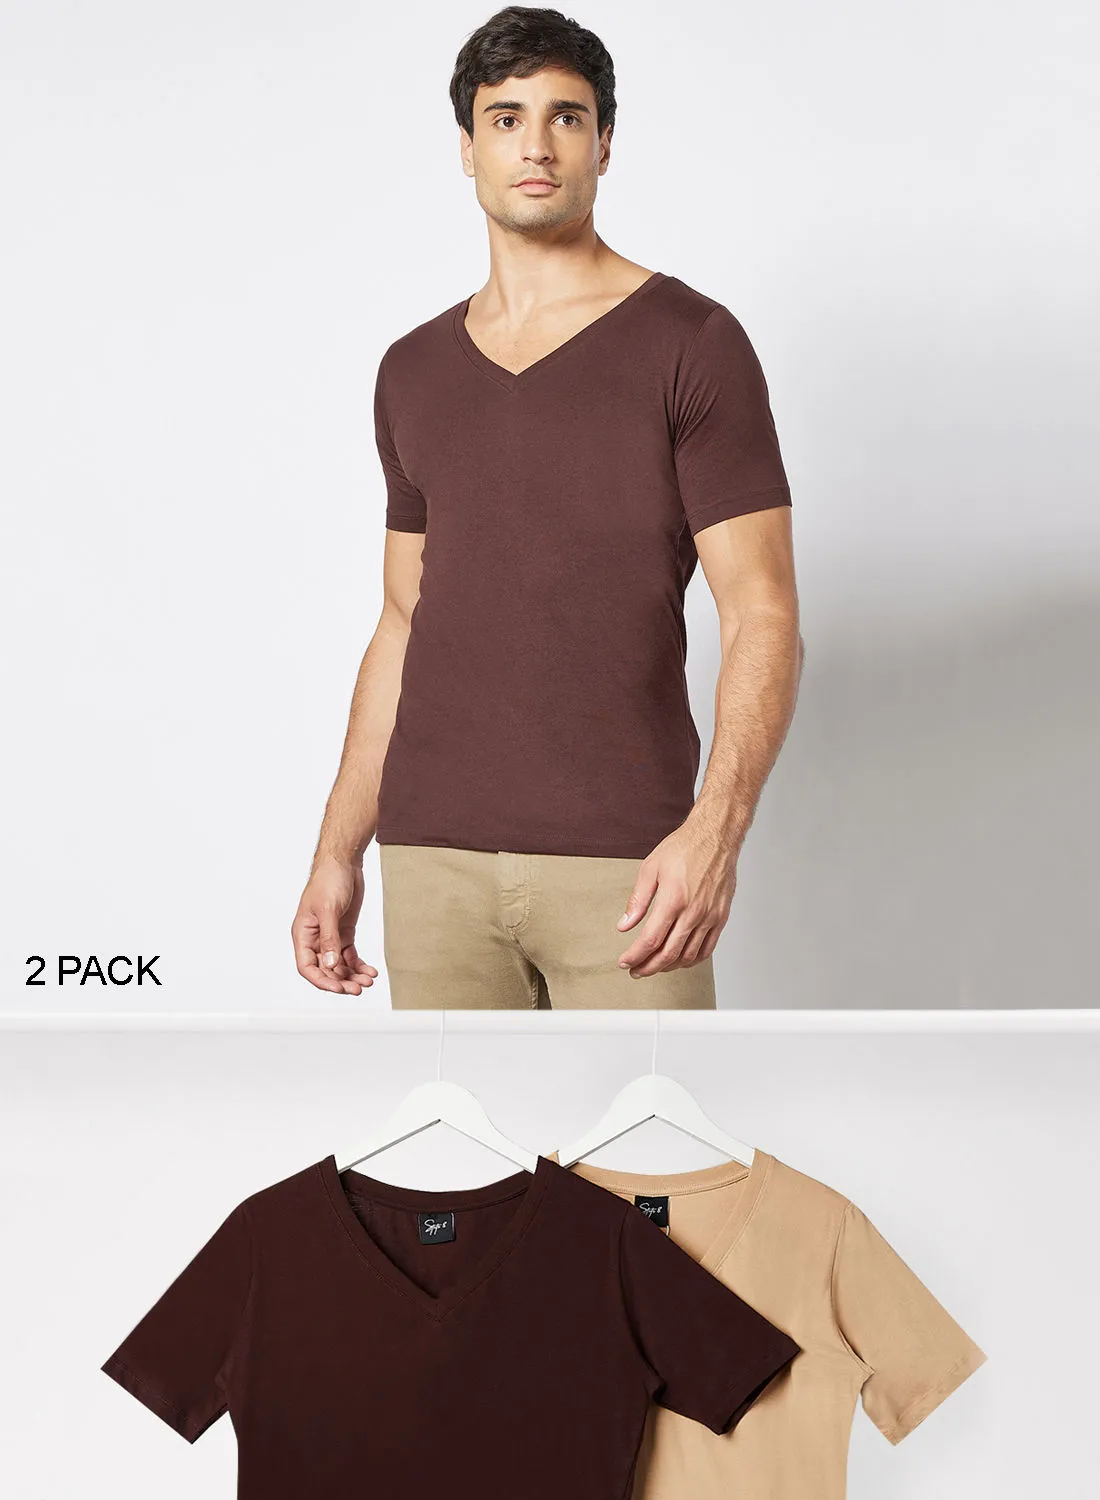 STATE 8 Essential V Neck T-Shirt (Pack of 2) Burgundy/Beige